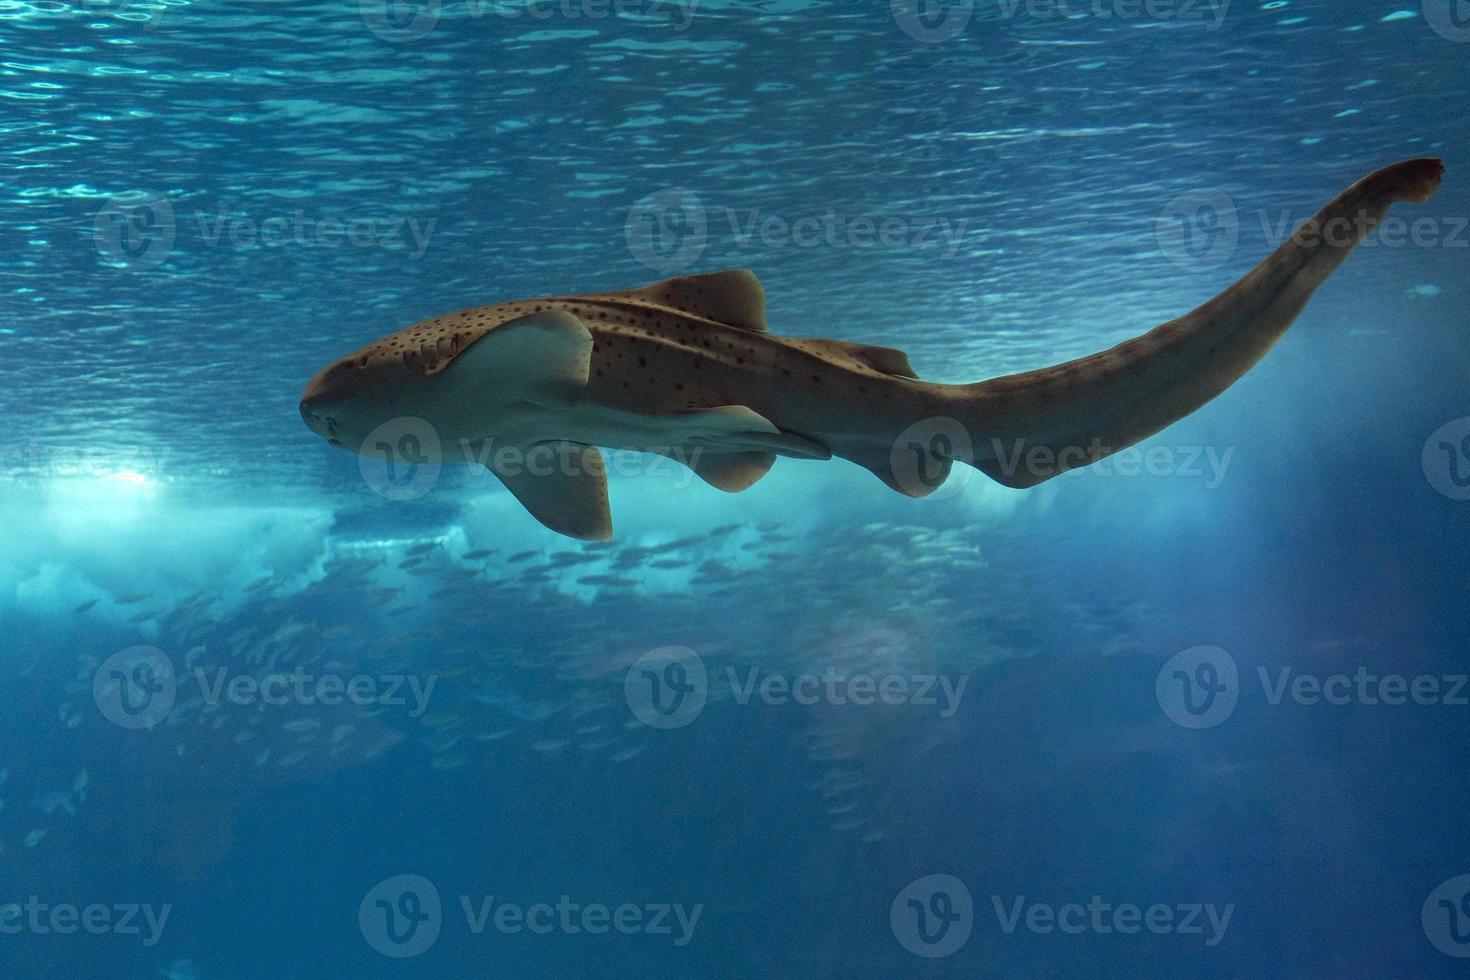 Zebra leopard shark underwater close up portrait photo